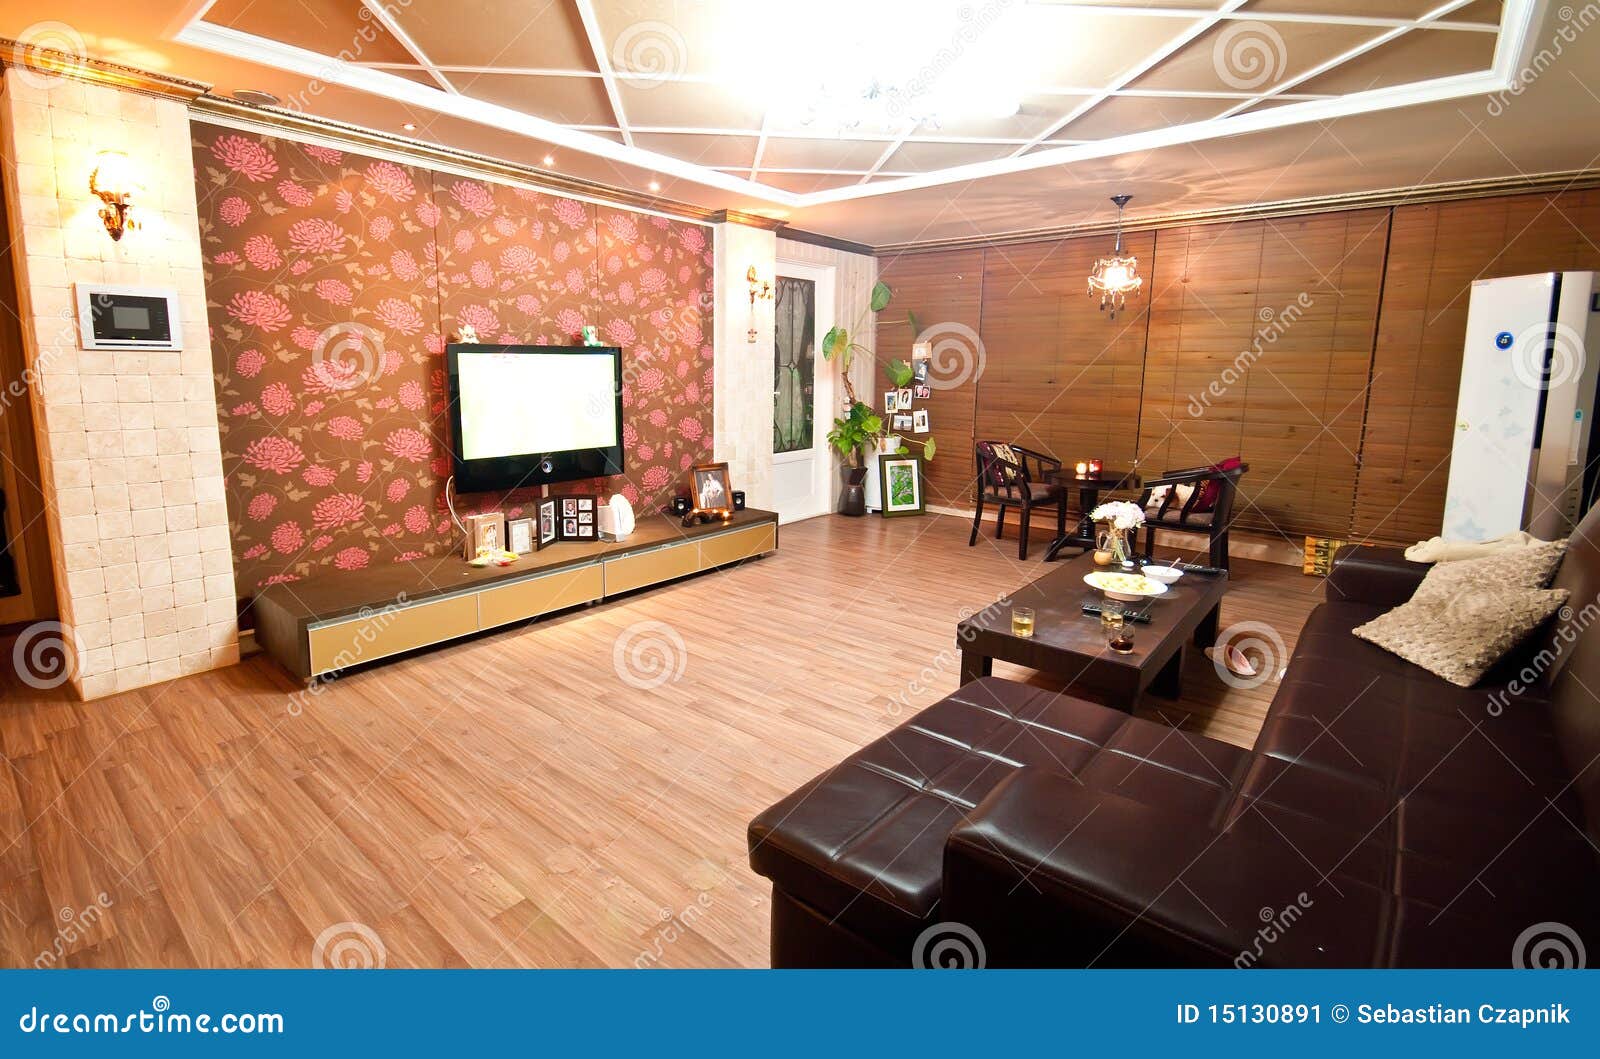 south korea style living room 15130891